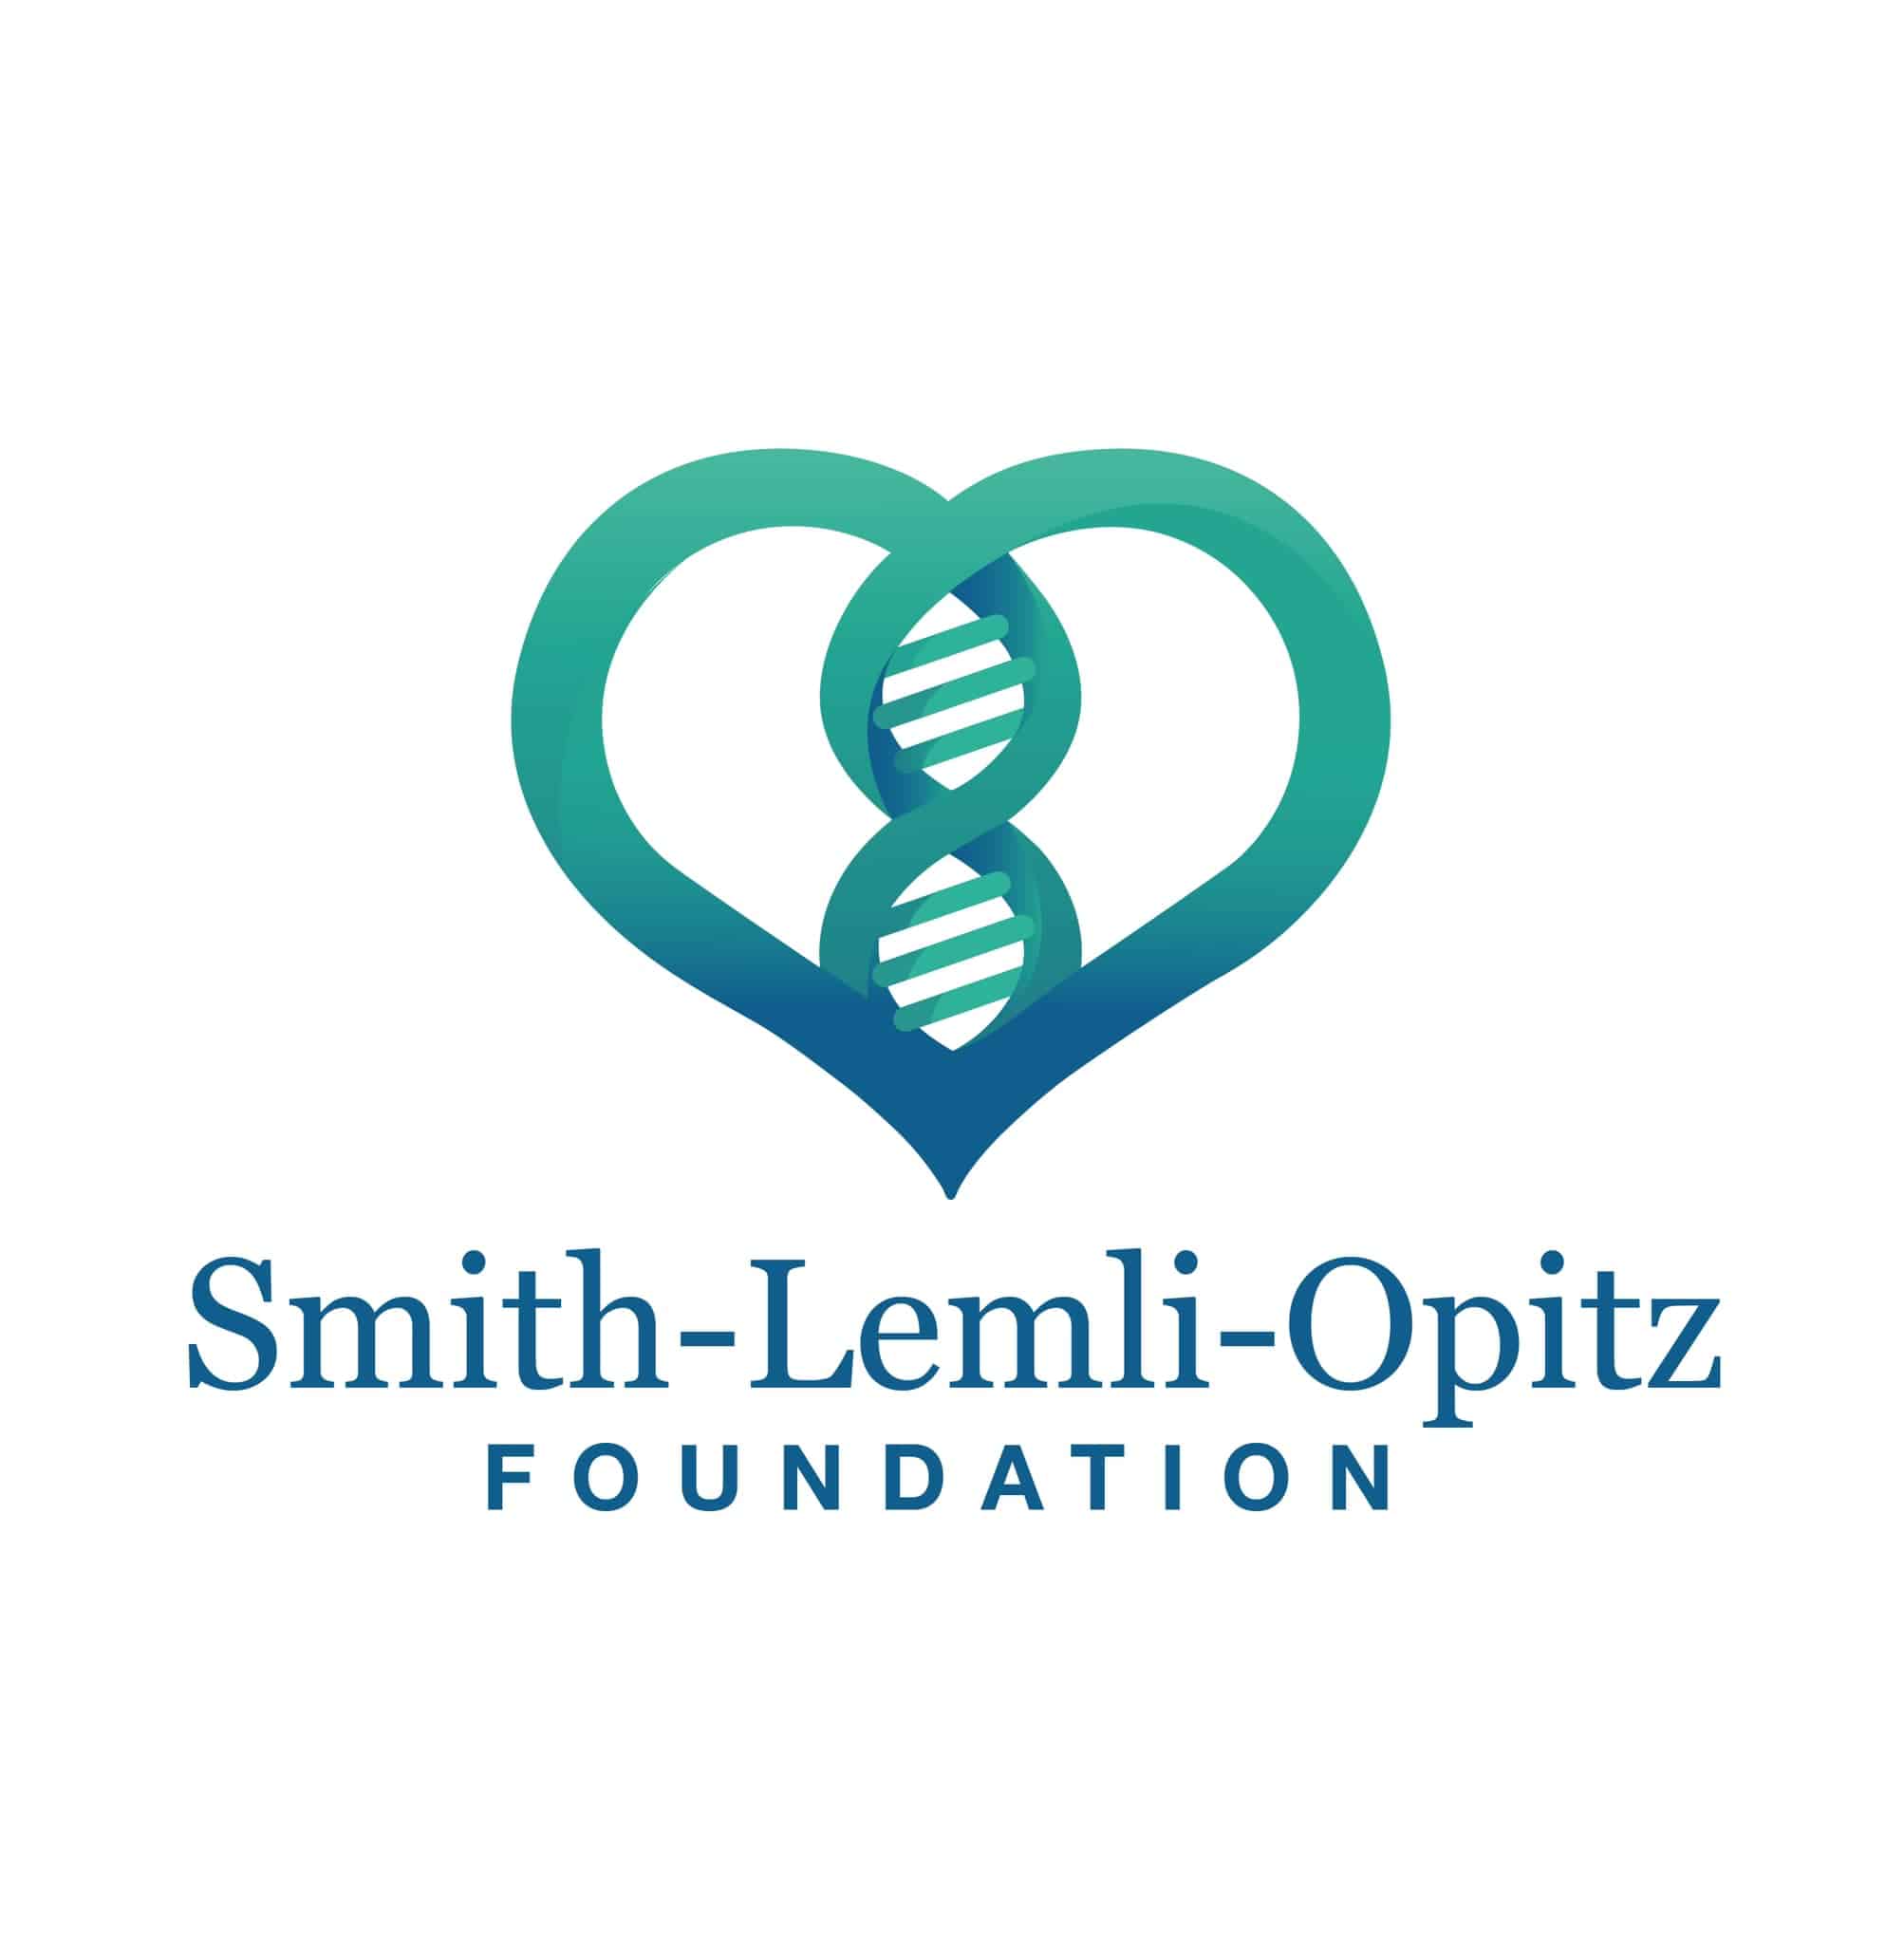 Smith-Lemli-Opitz Foundation logo